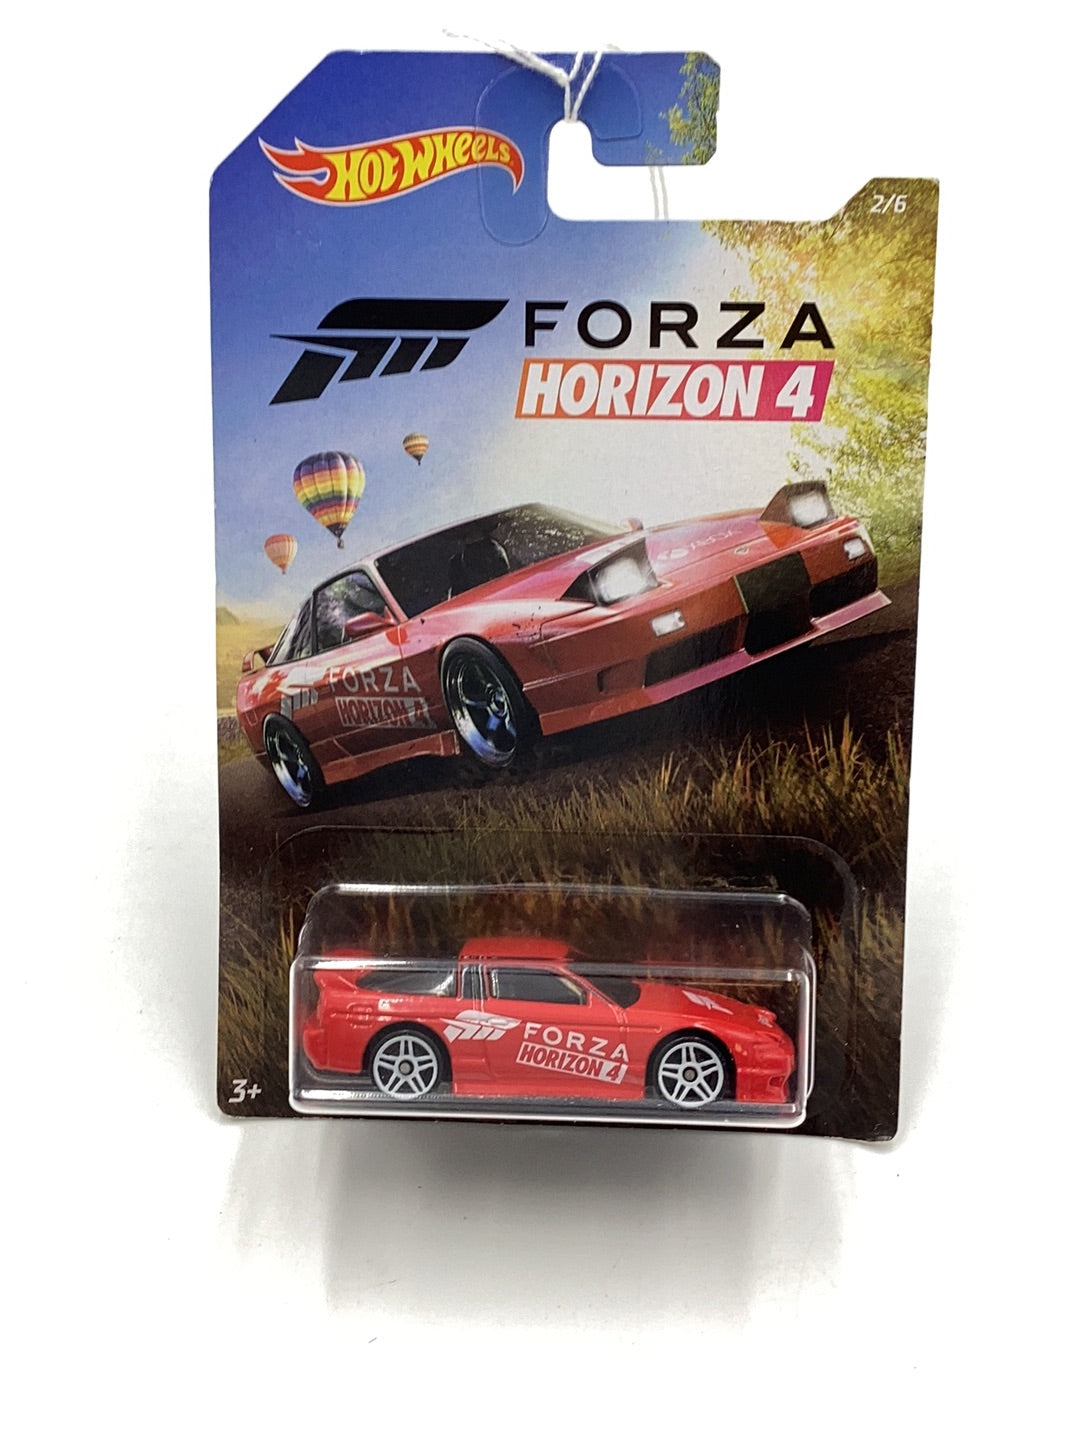 Hot wheels Forza Horizon 4 2/6 96 Nissan 180SX Type X 151G